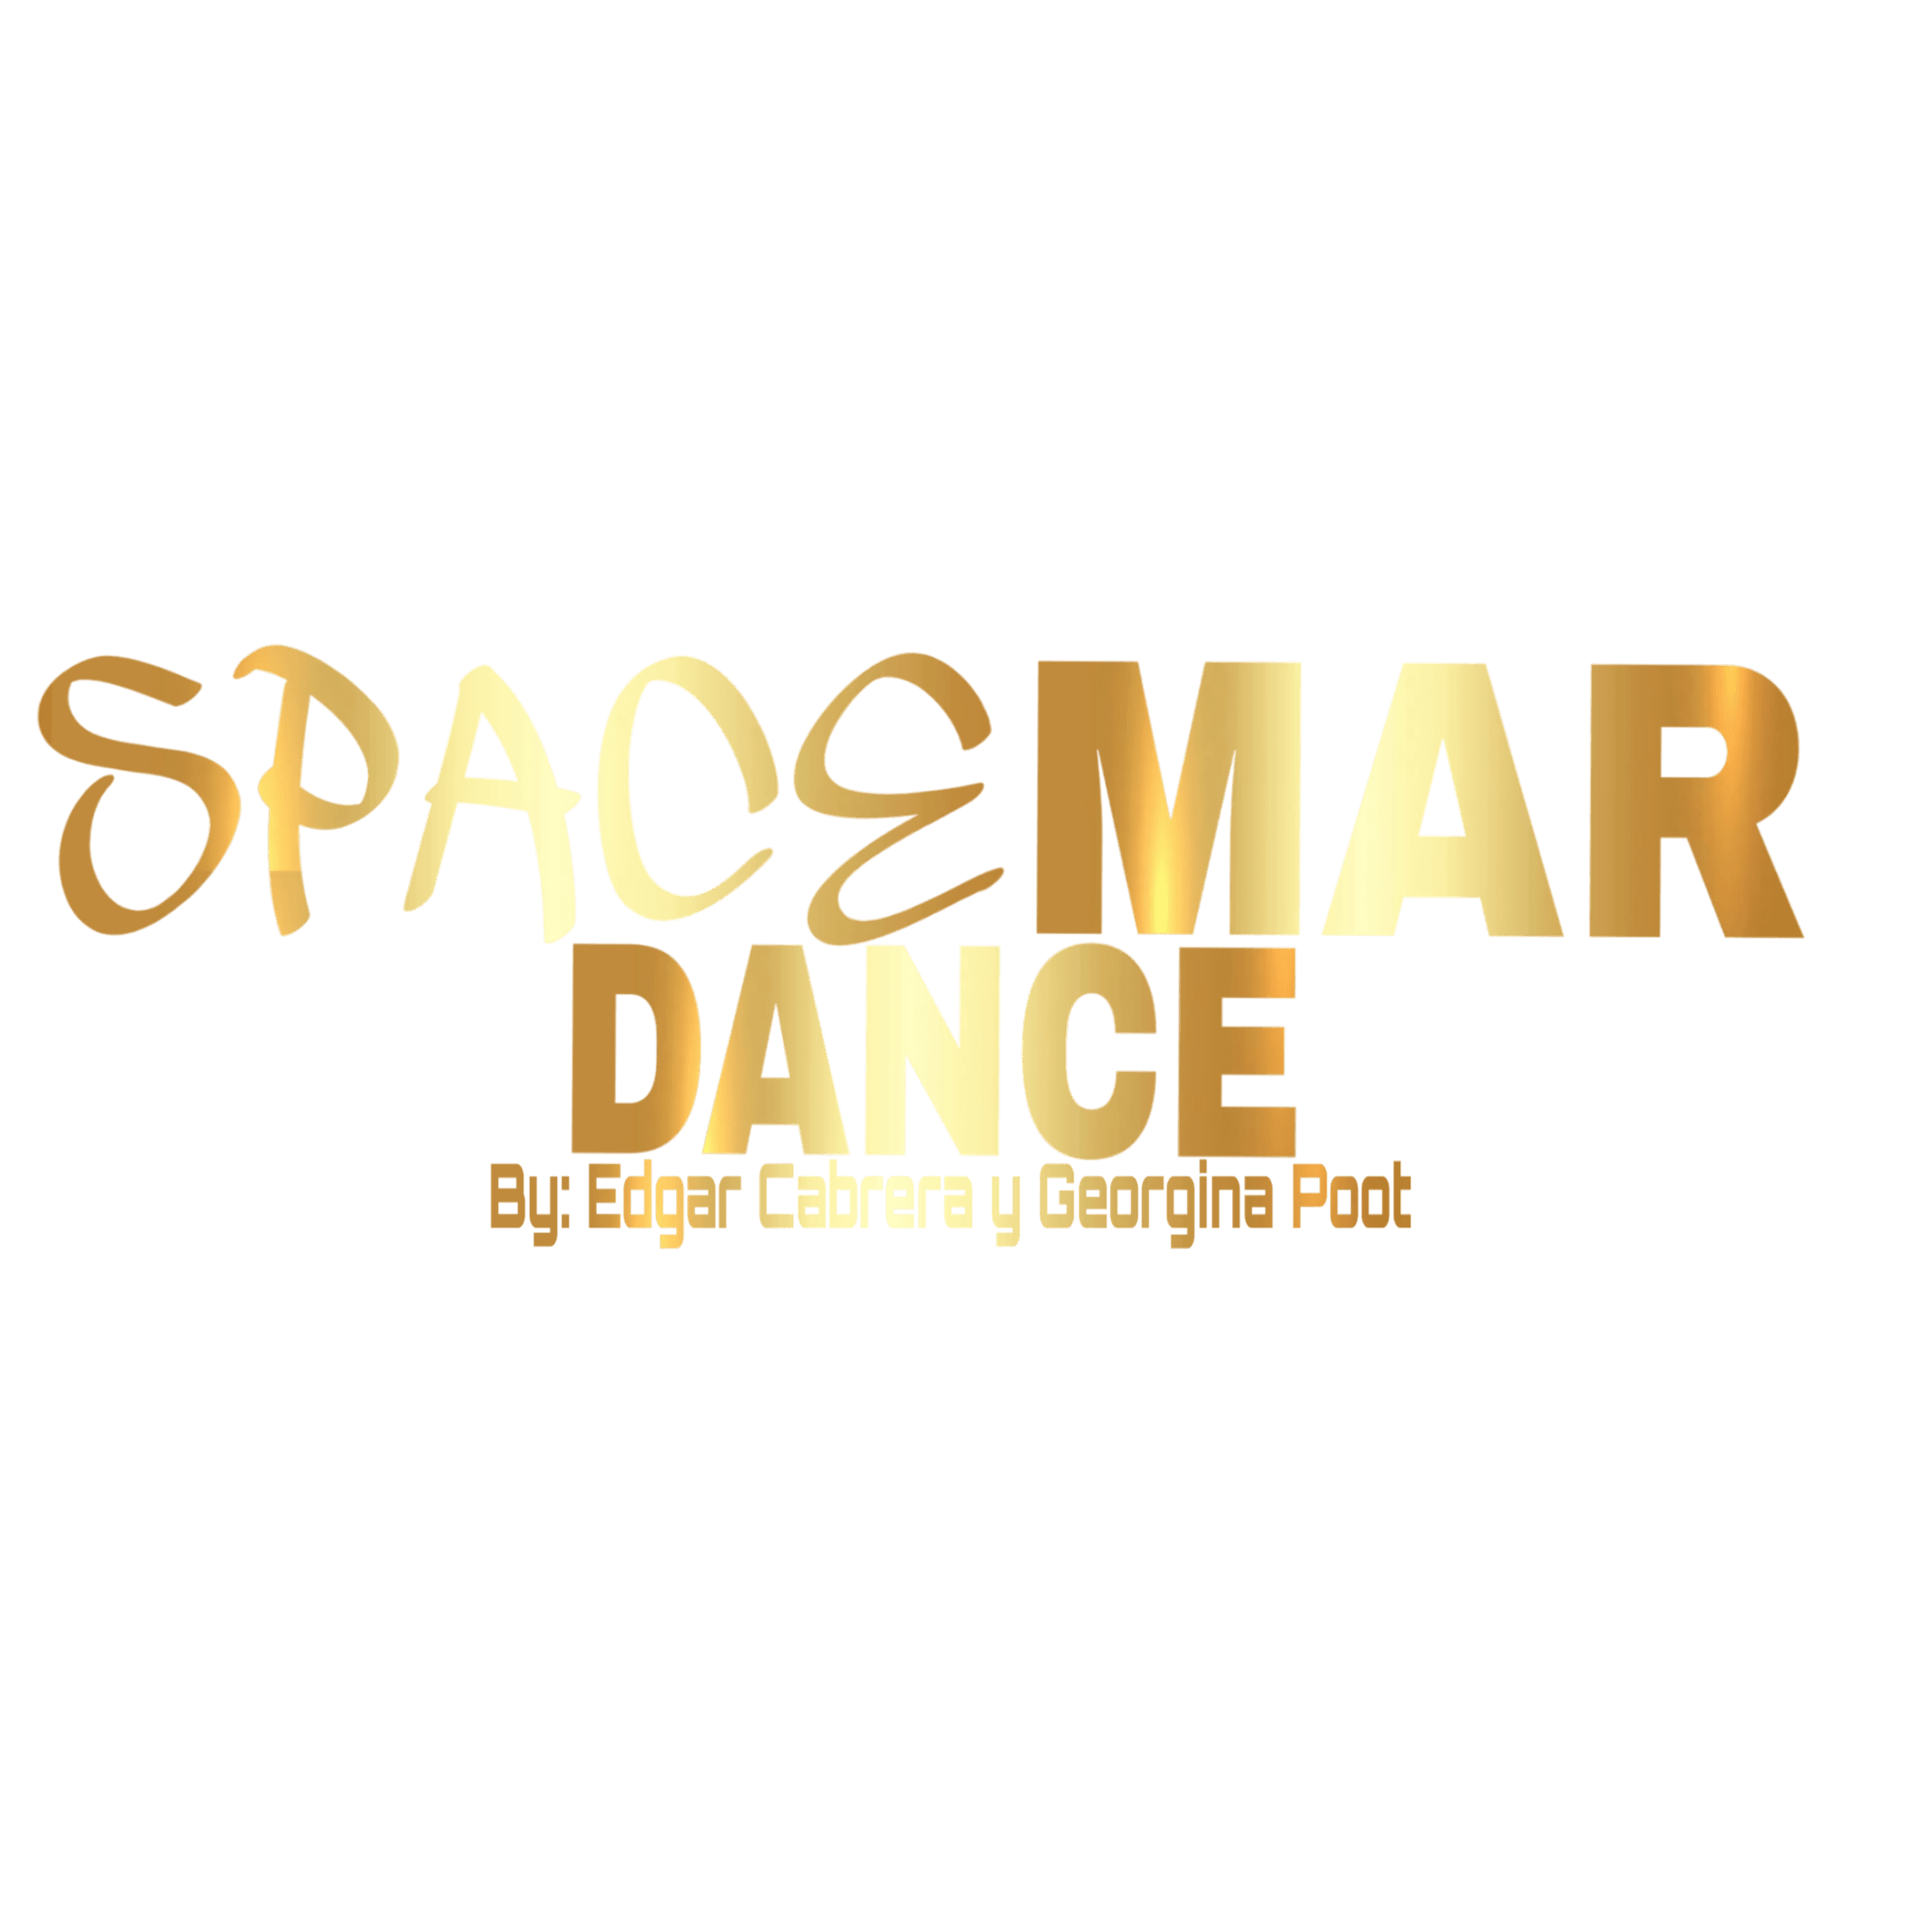 Spacemar Dance